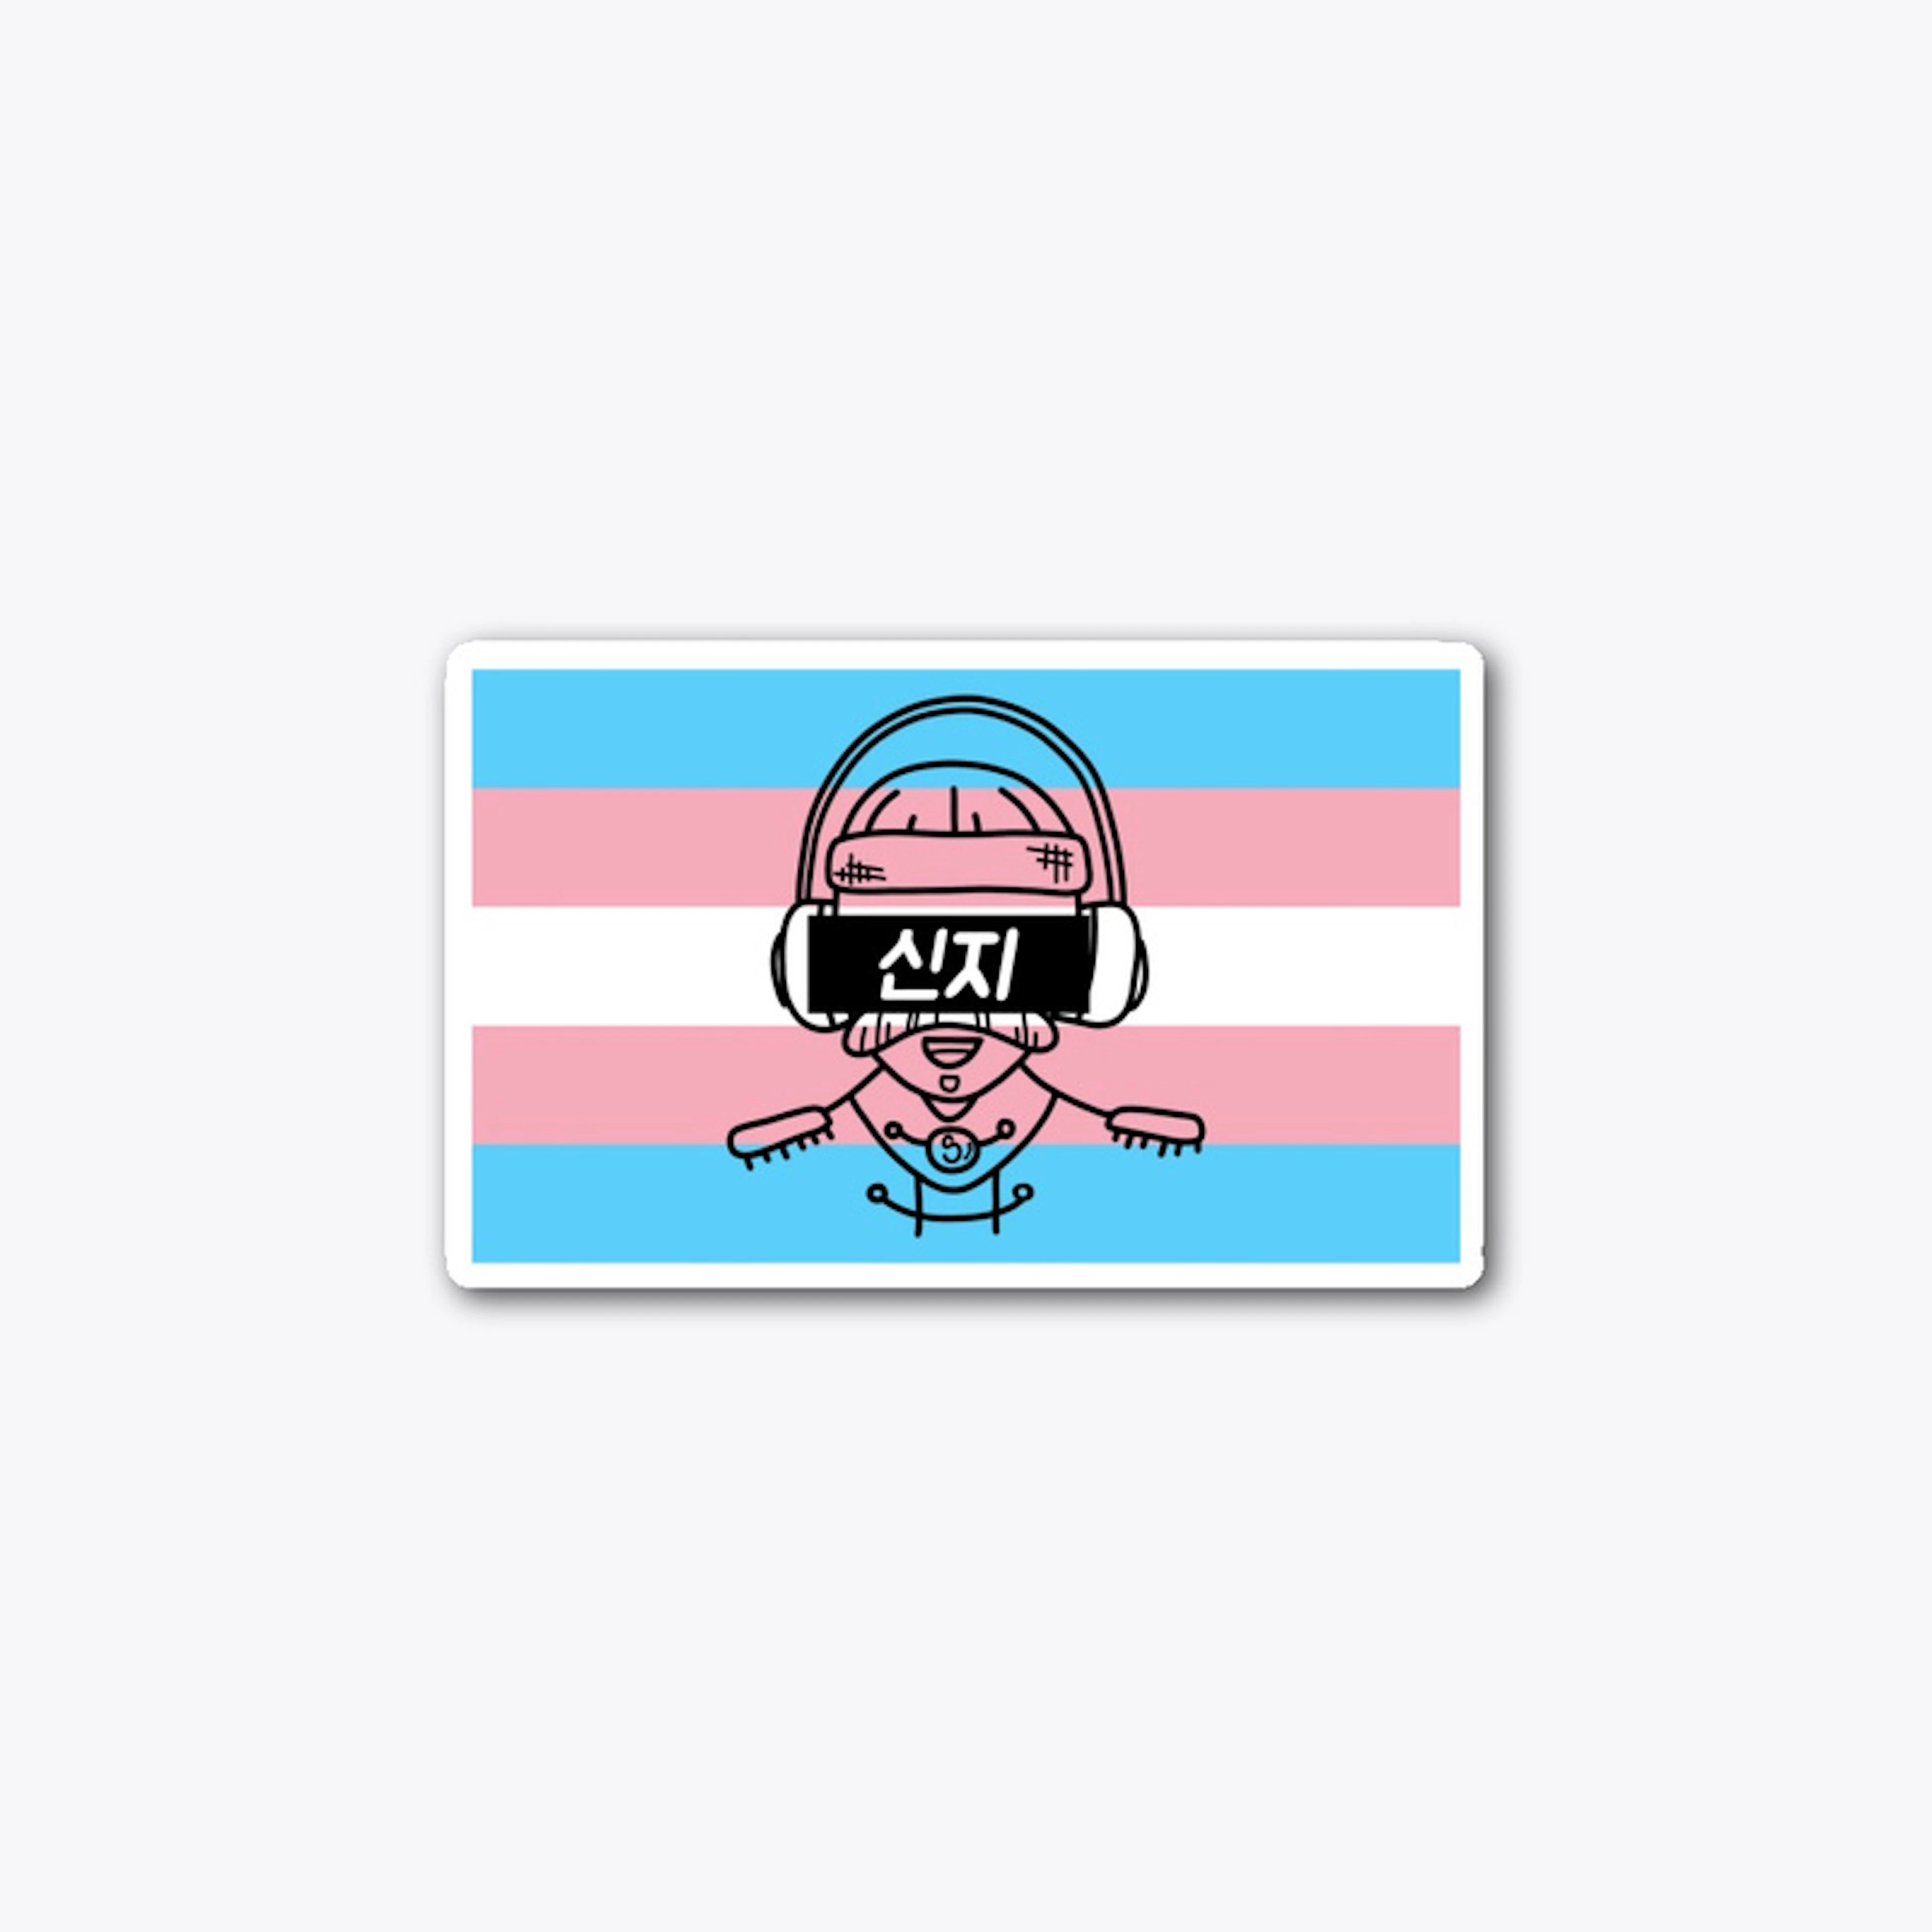 Trans Sticker